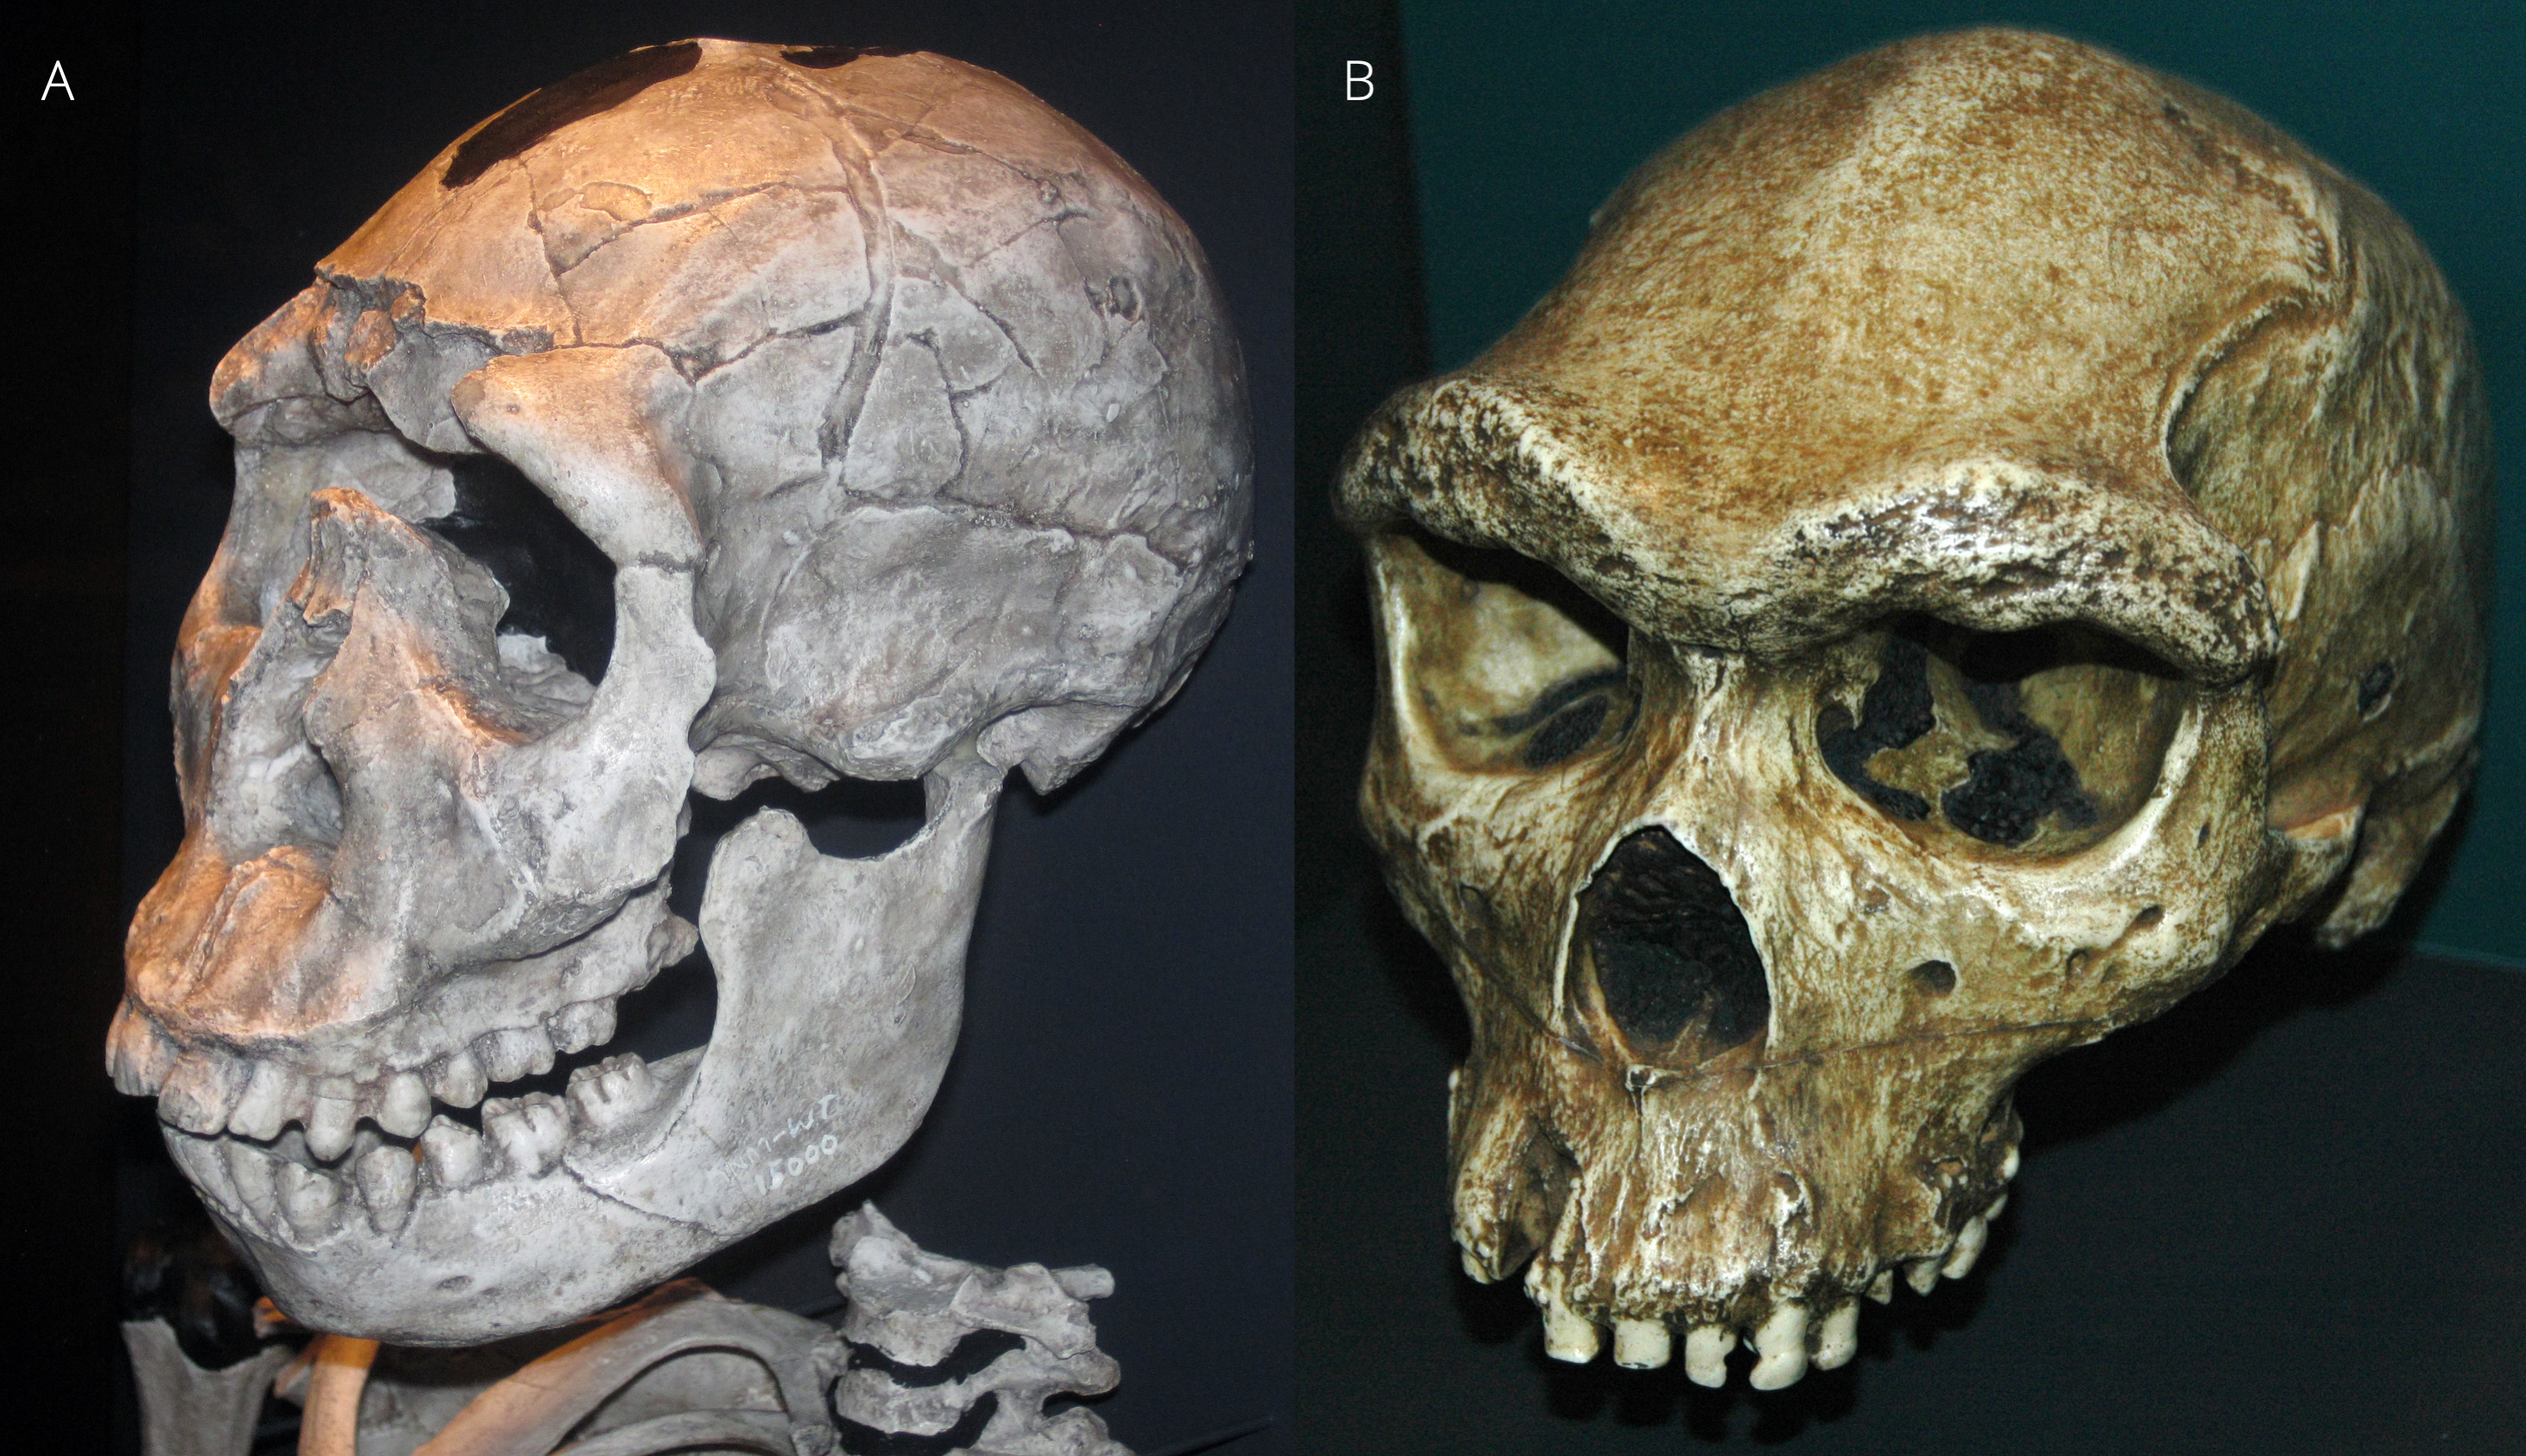 A. *Homo ergaster* skull from Nariokotome, Lake Turkana area, Kenya. B. *Homo heidelbergensis* skull from Kabwe, central Zambia, southern Africa. Photos by [James St. John](https://www.flickr.com/photos/jsjgeology/), [CC BY 2.0](https://www.flickr.com/photos/jsjgeology/).